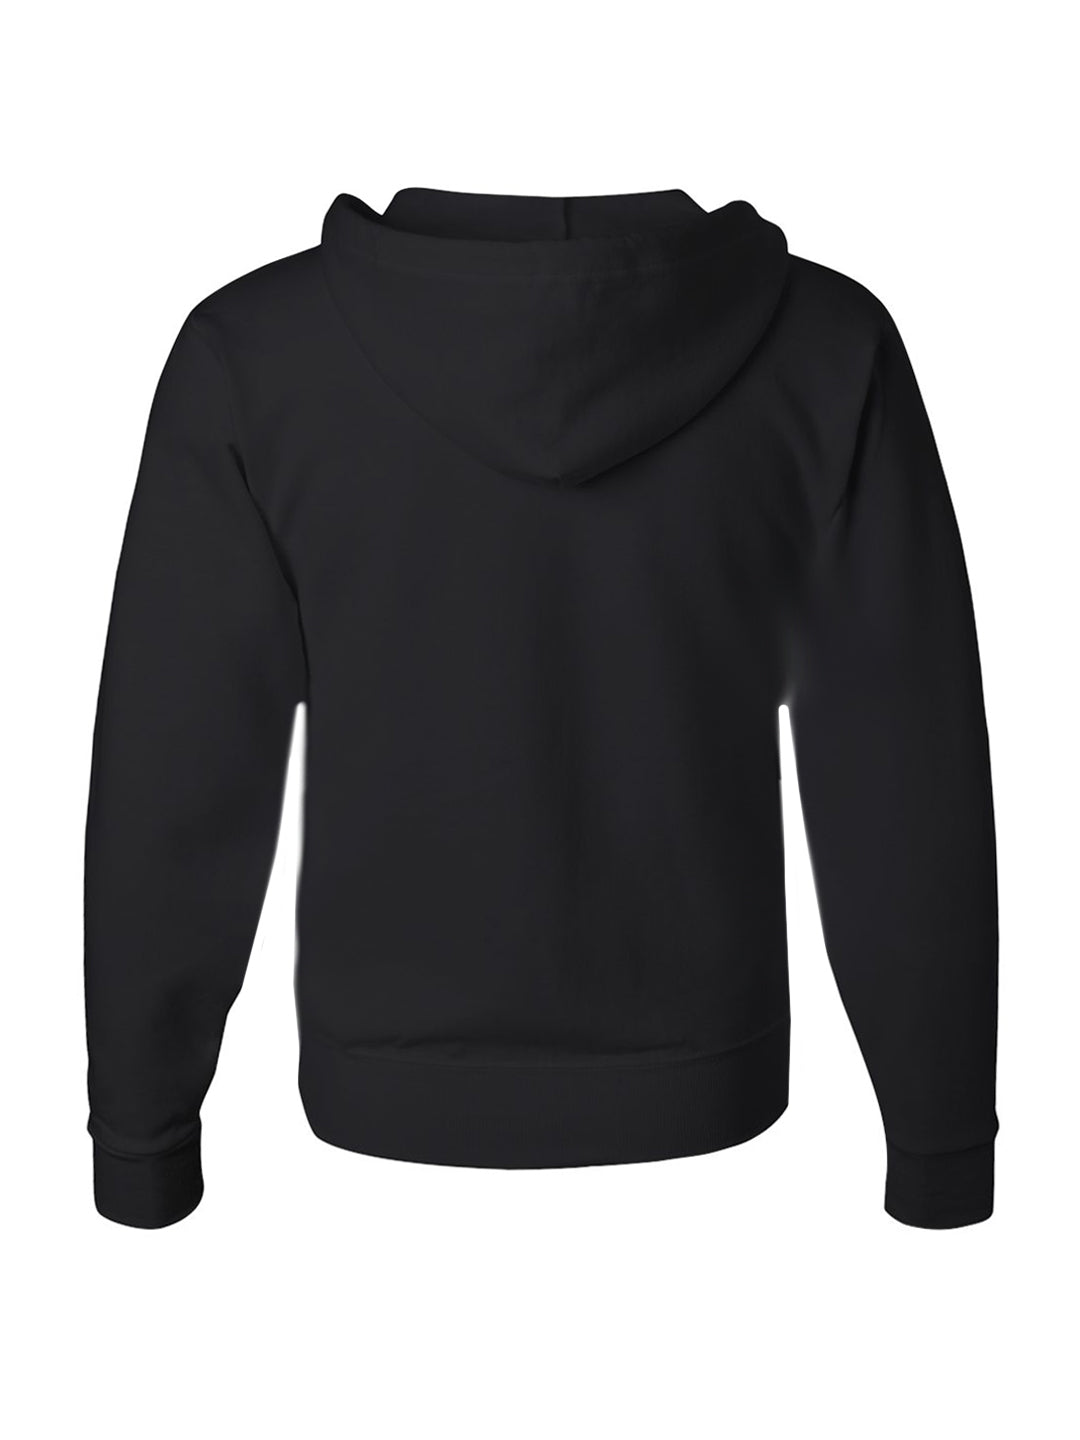 Full-Zip Hooded Sweatshirt - Adult